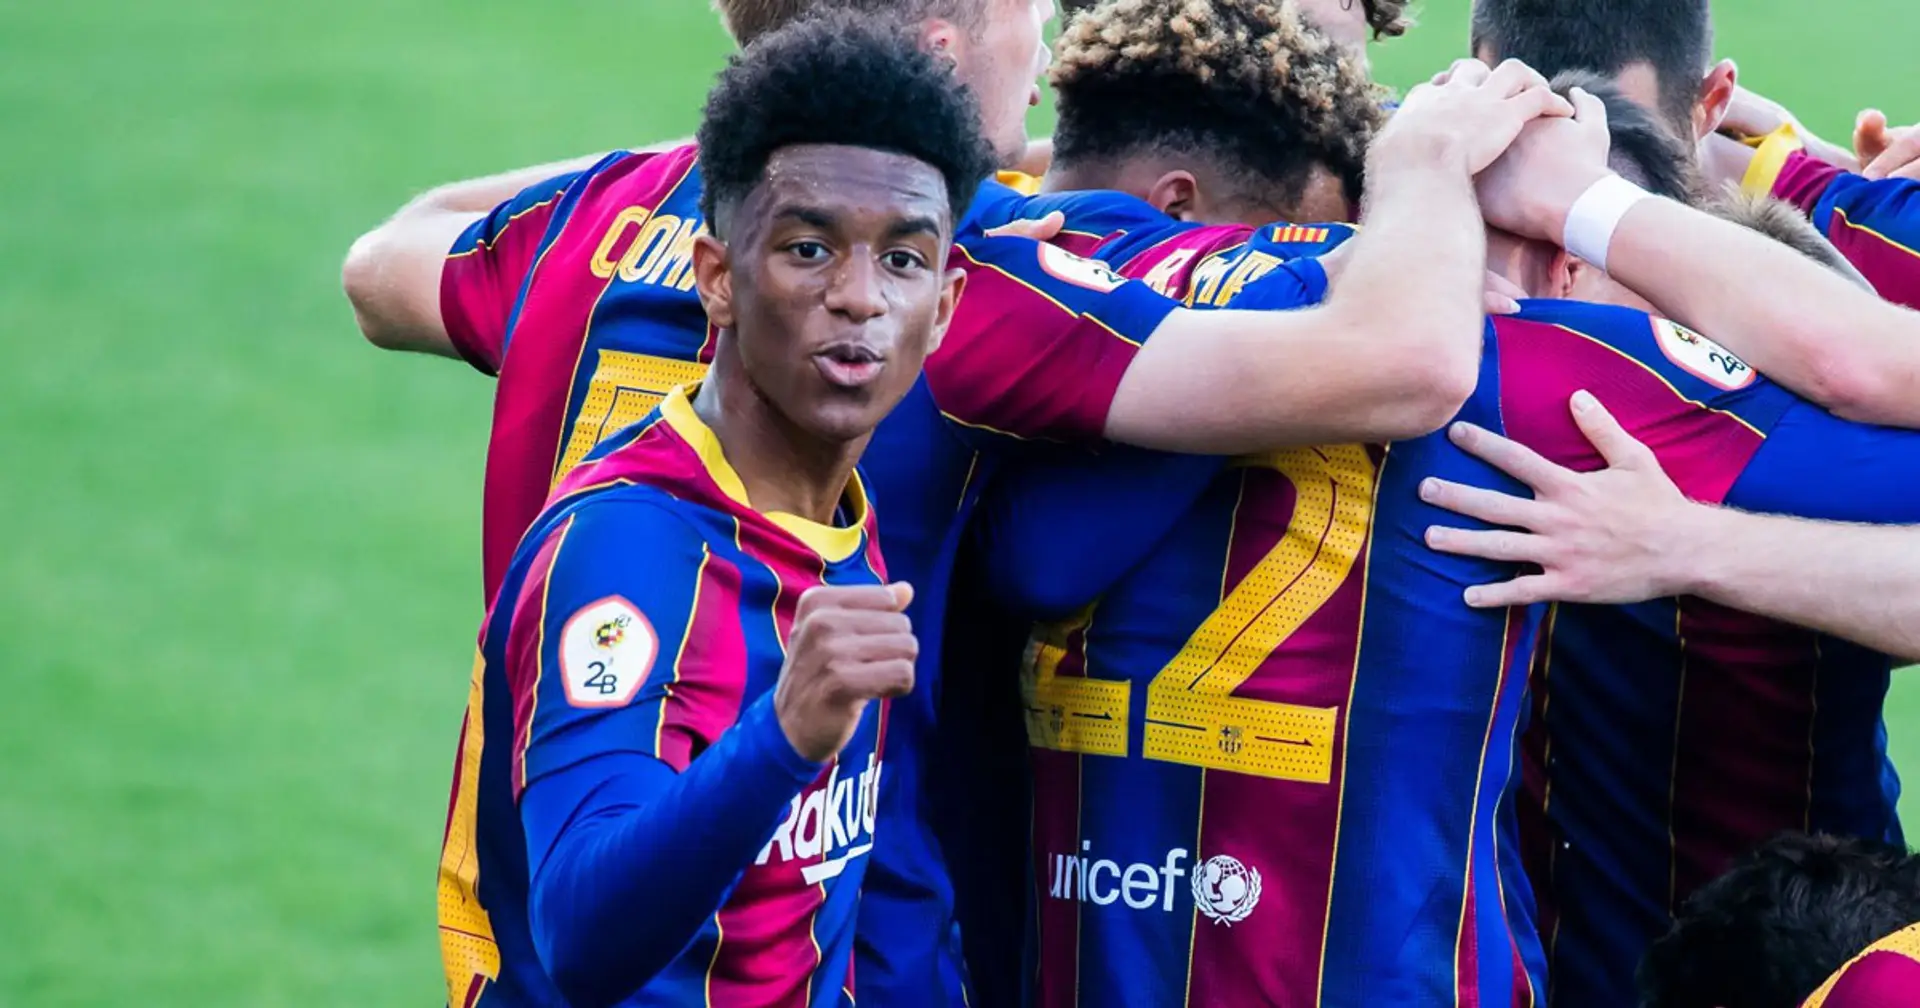 Barca B beat Villarreal B in 7-goal thriller despite heavy rotations (video)